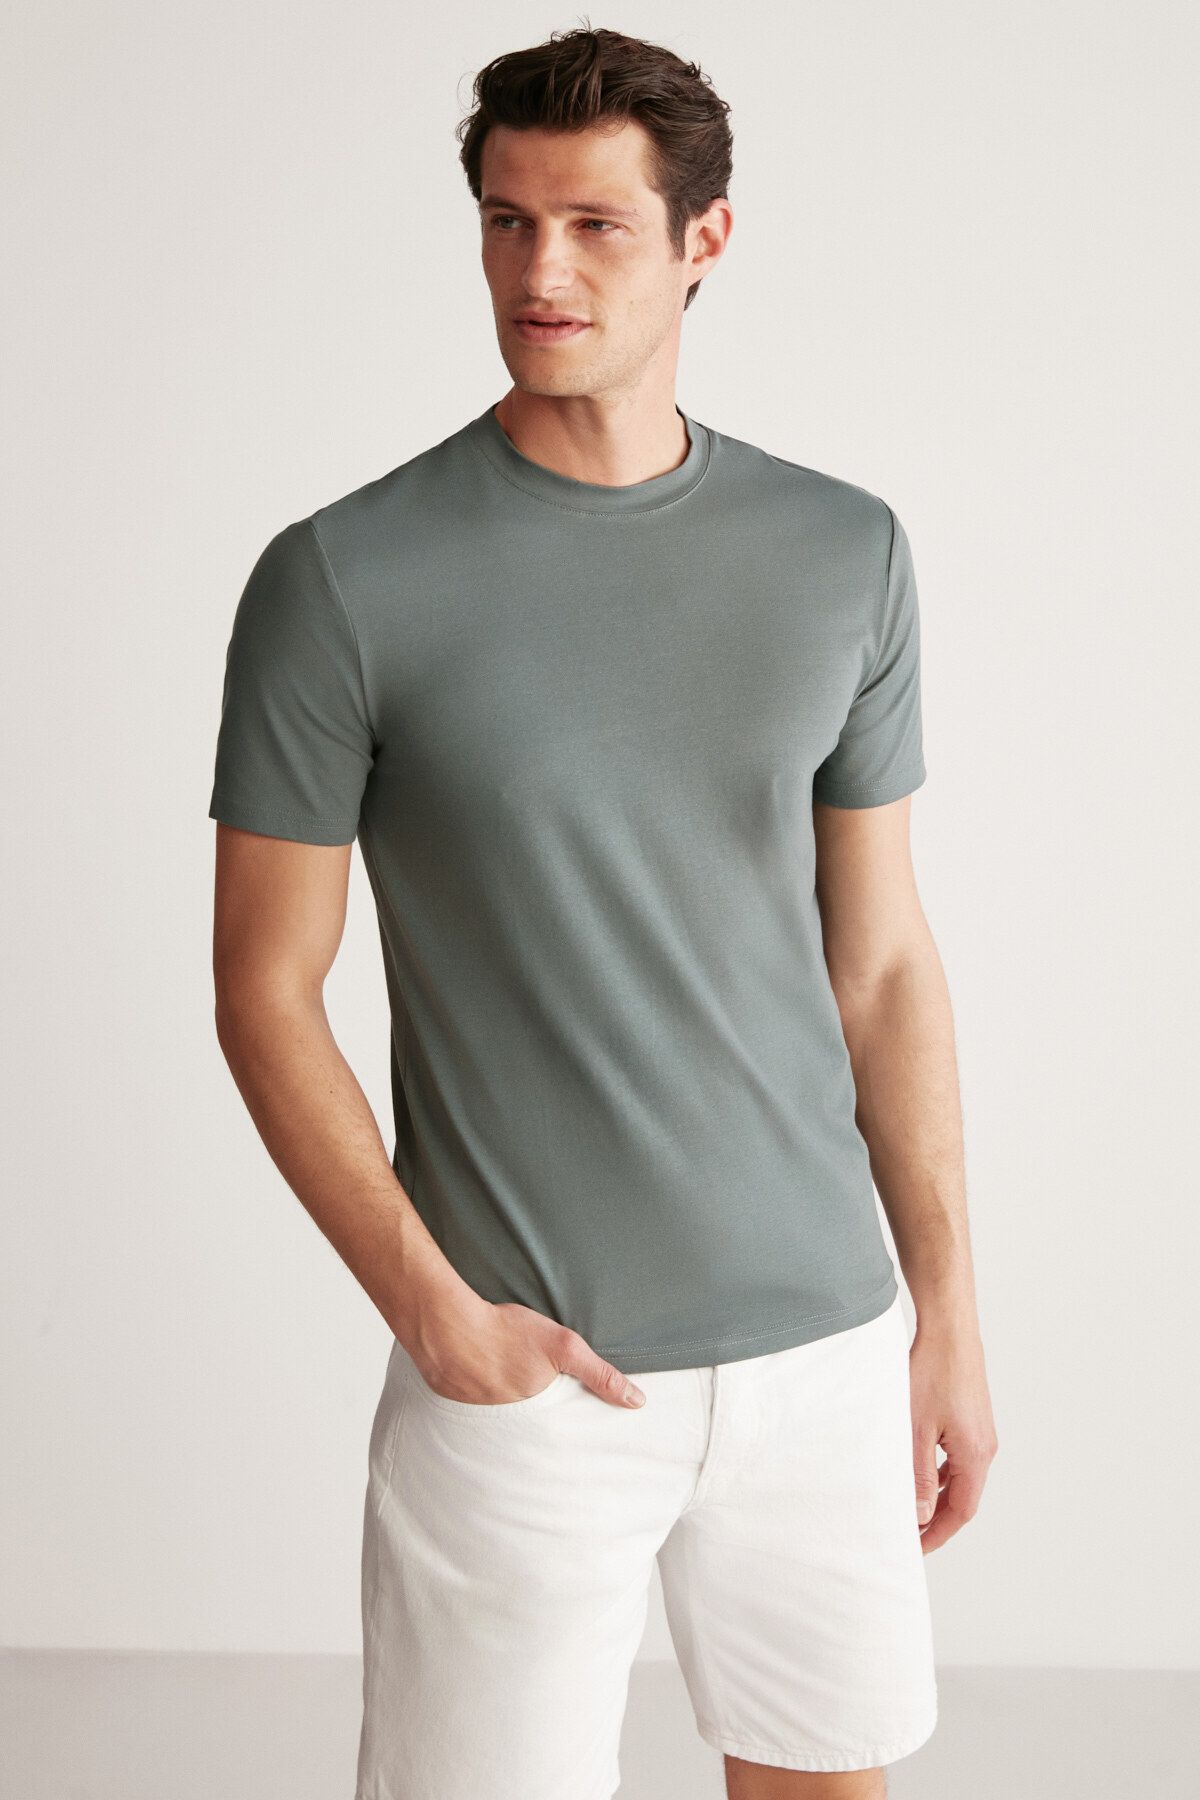 GRIMELANGE Chad Erkek Slim Fit Ultra Esnek Yeşil T-shirt